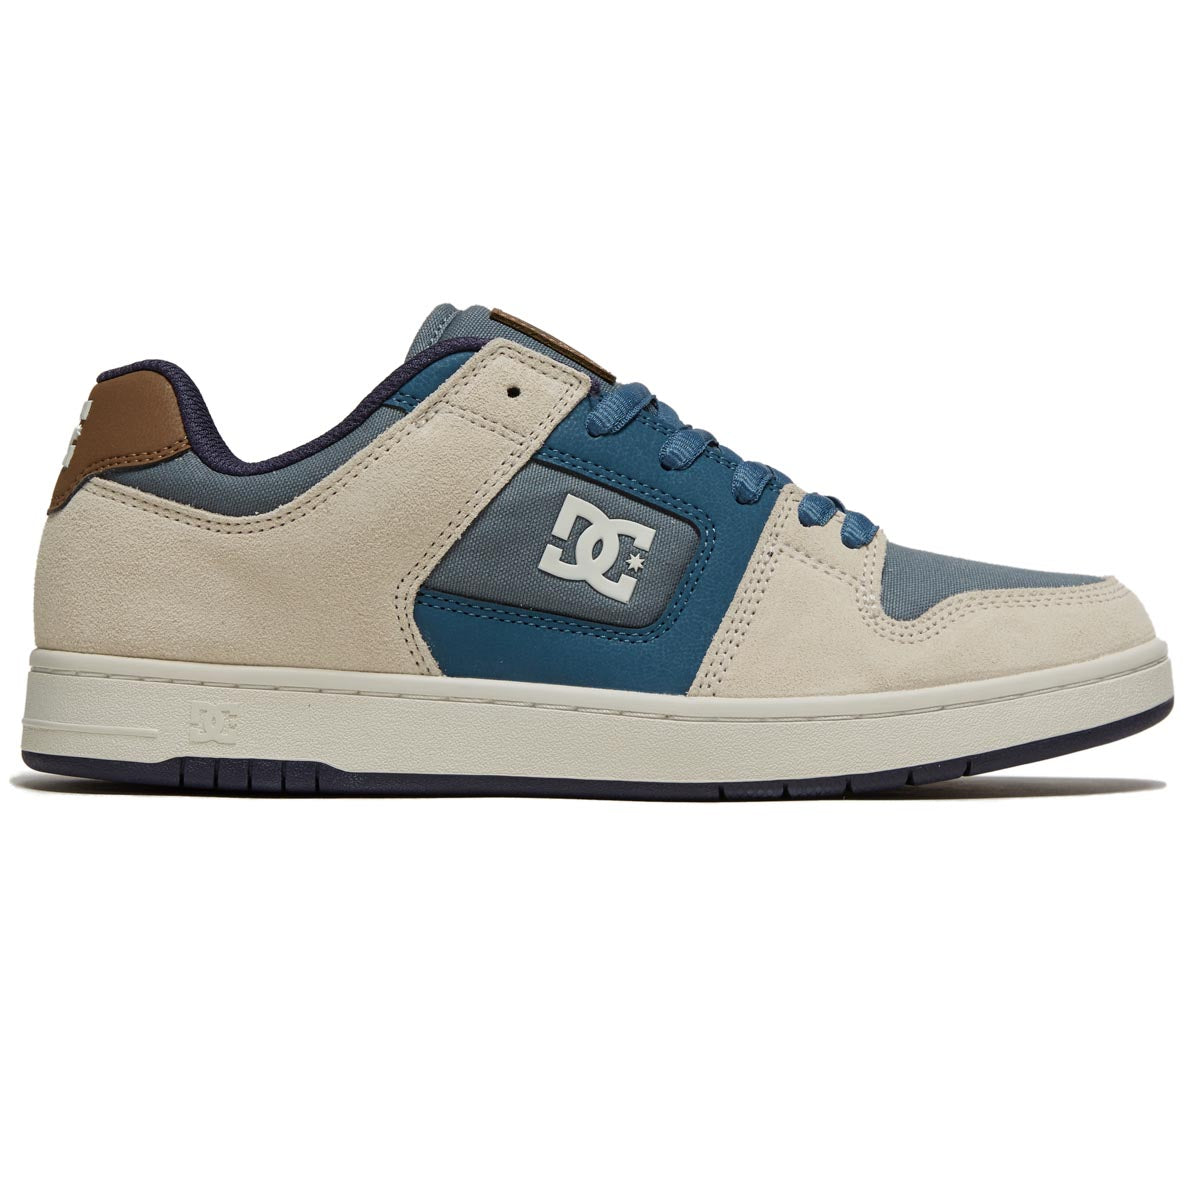 DC Manteca 4 Shoes - Grey/Blue/White image 1